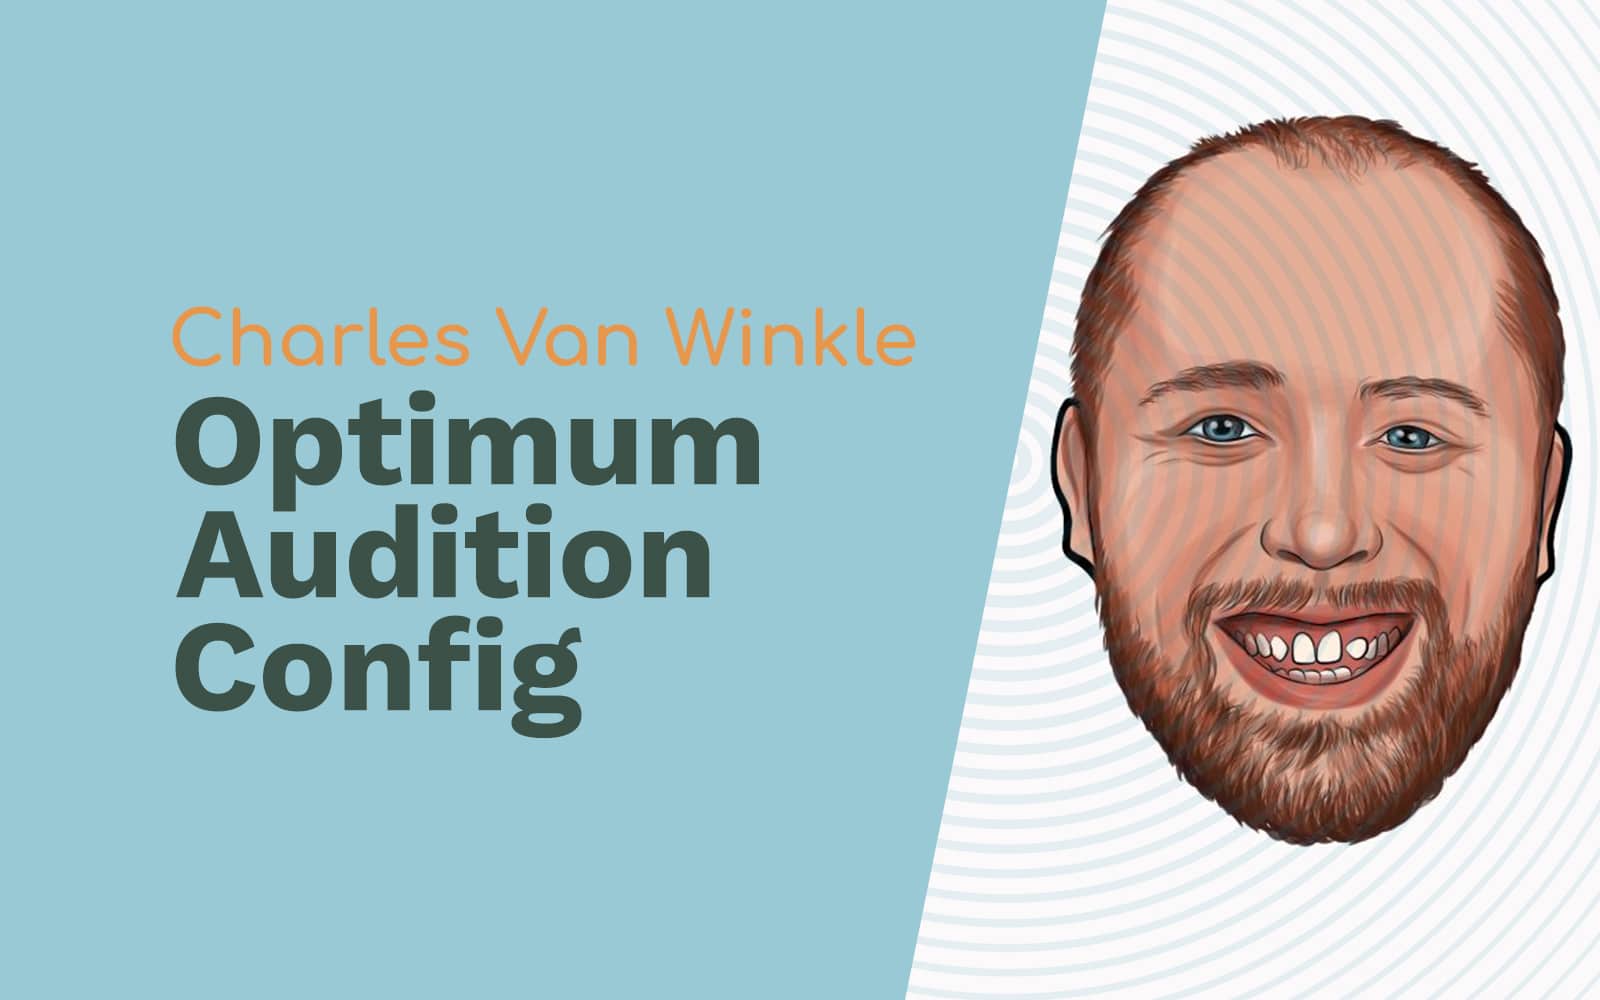 Charles Van Winkle: Audio Engineering, Audio Forensics and Optimum Audition Config Adobe Audition Podcast  Music Radio Creative